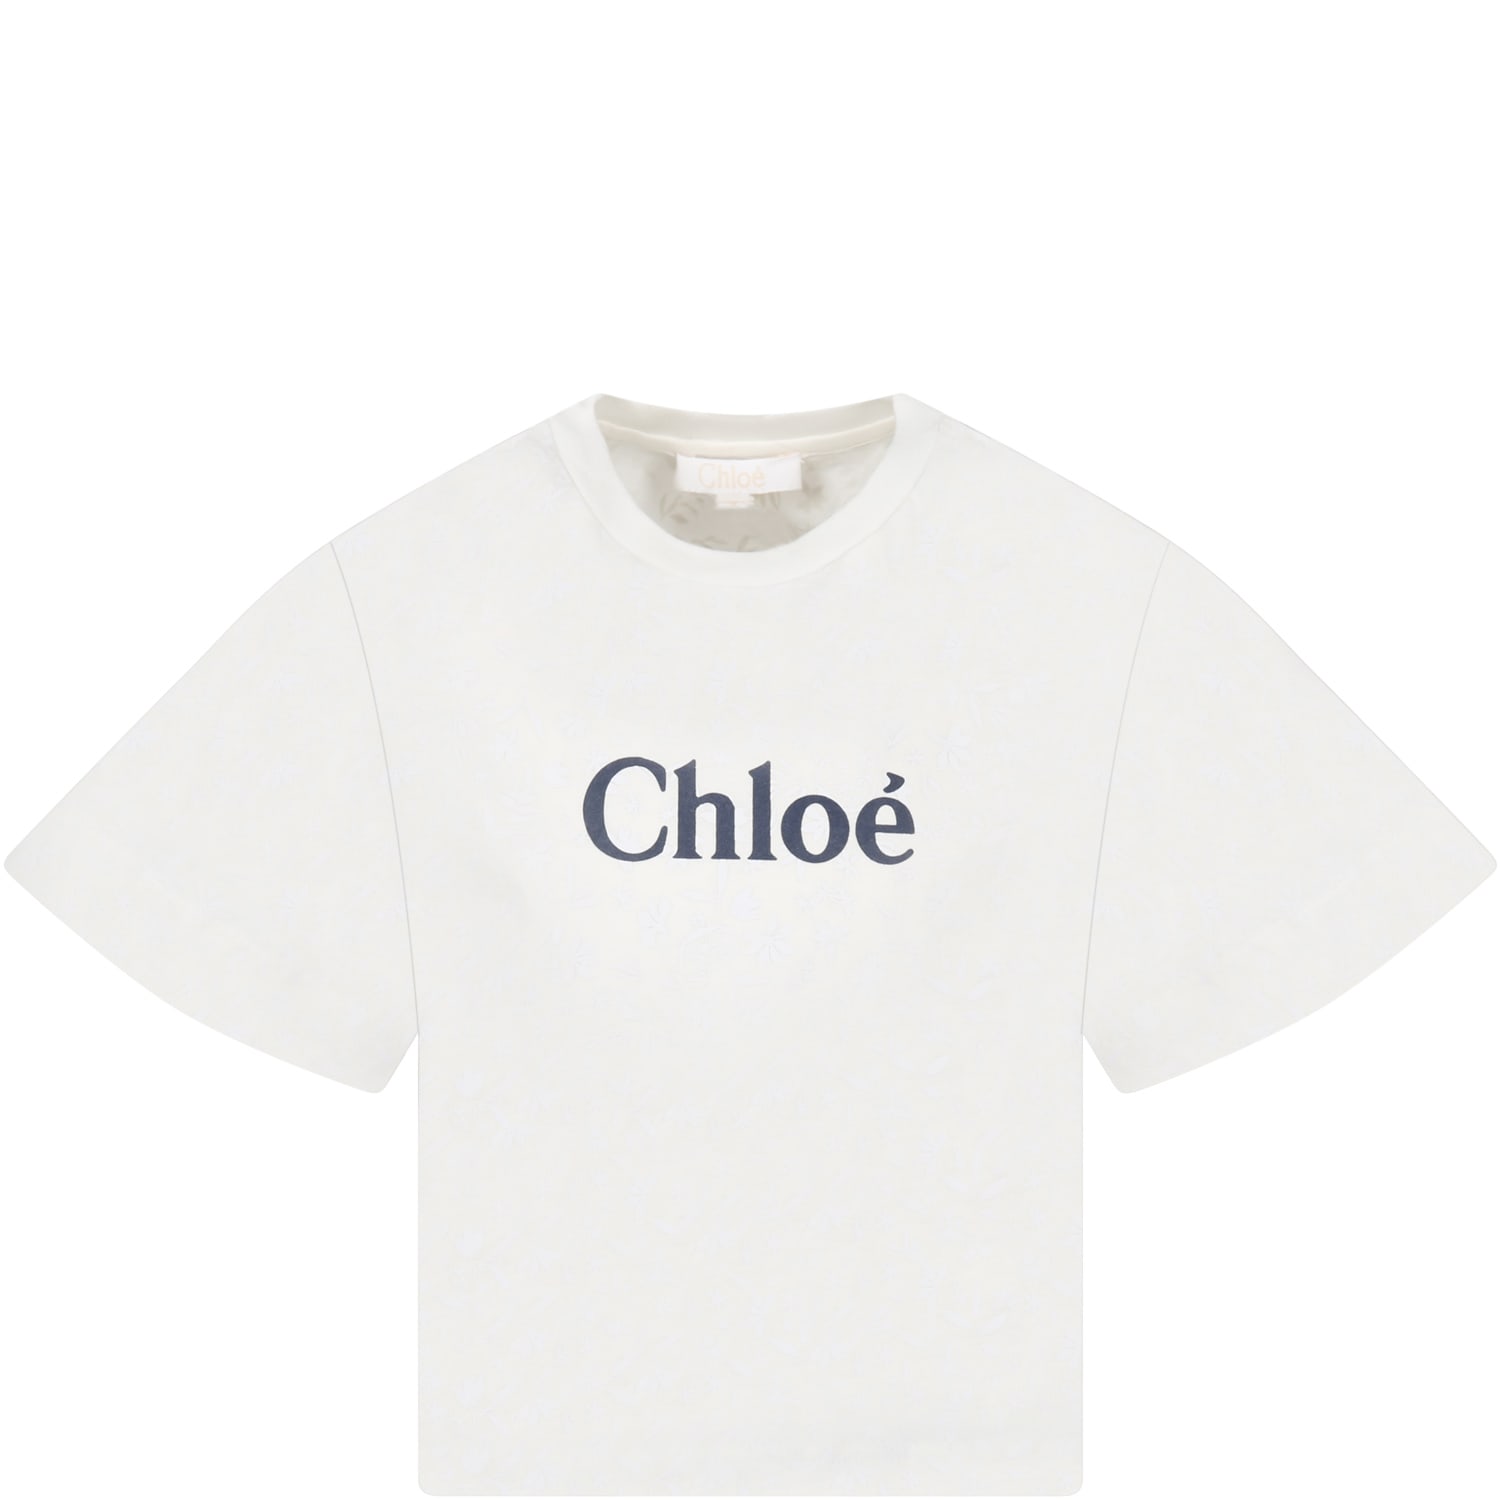 Chloé White T-shirt For Girl With Blue Logo